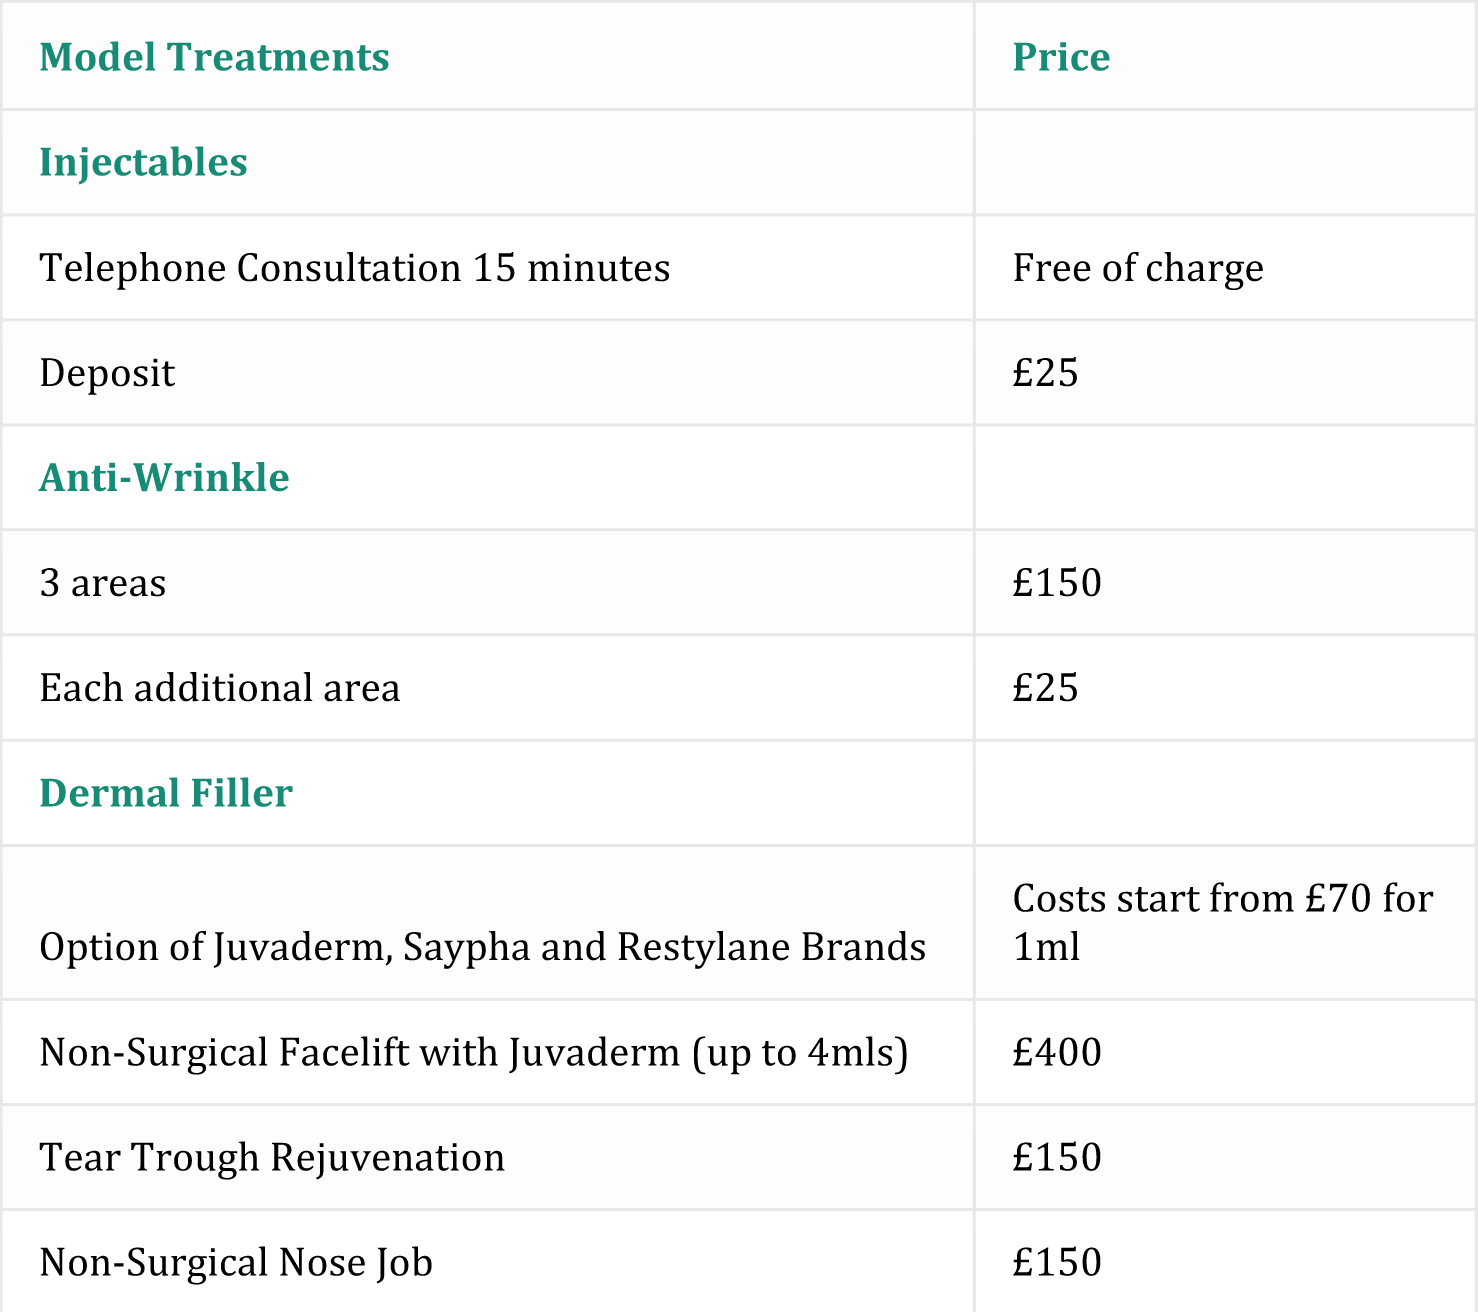 Model Treatments Price list